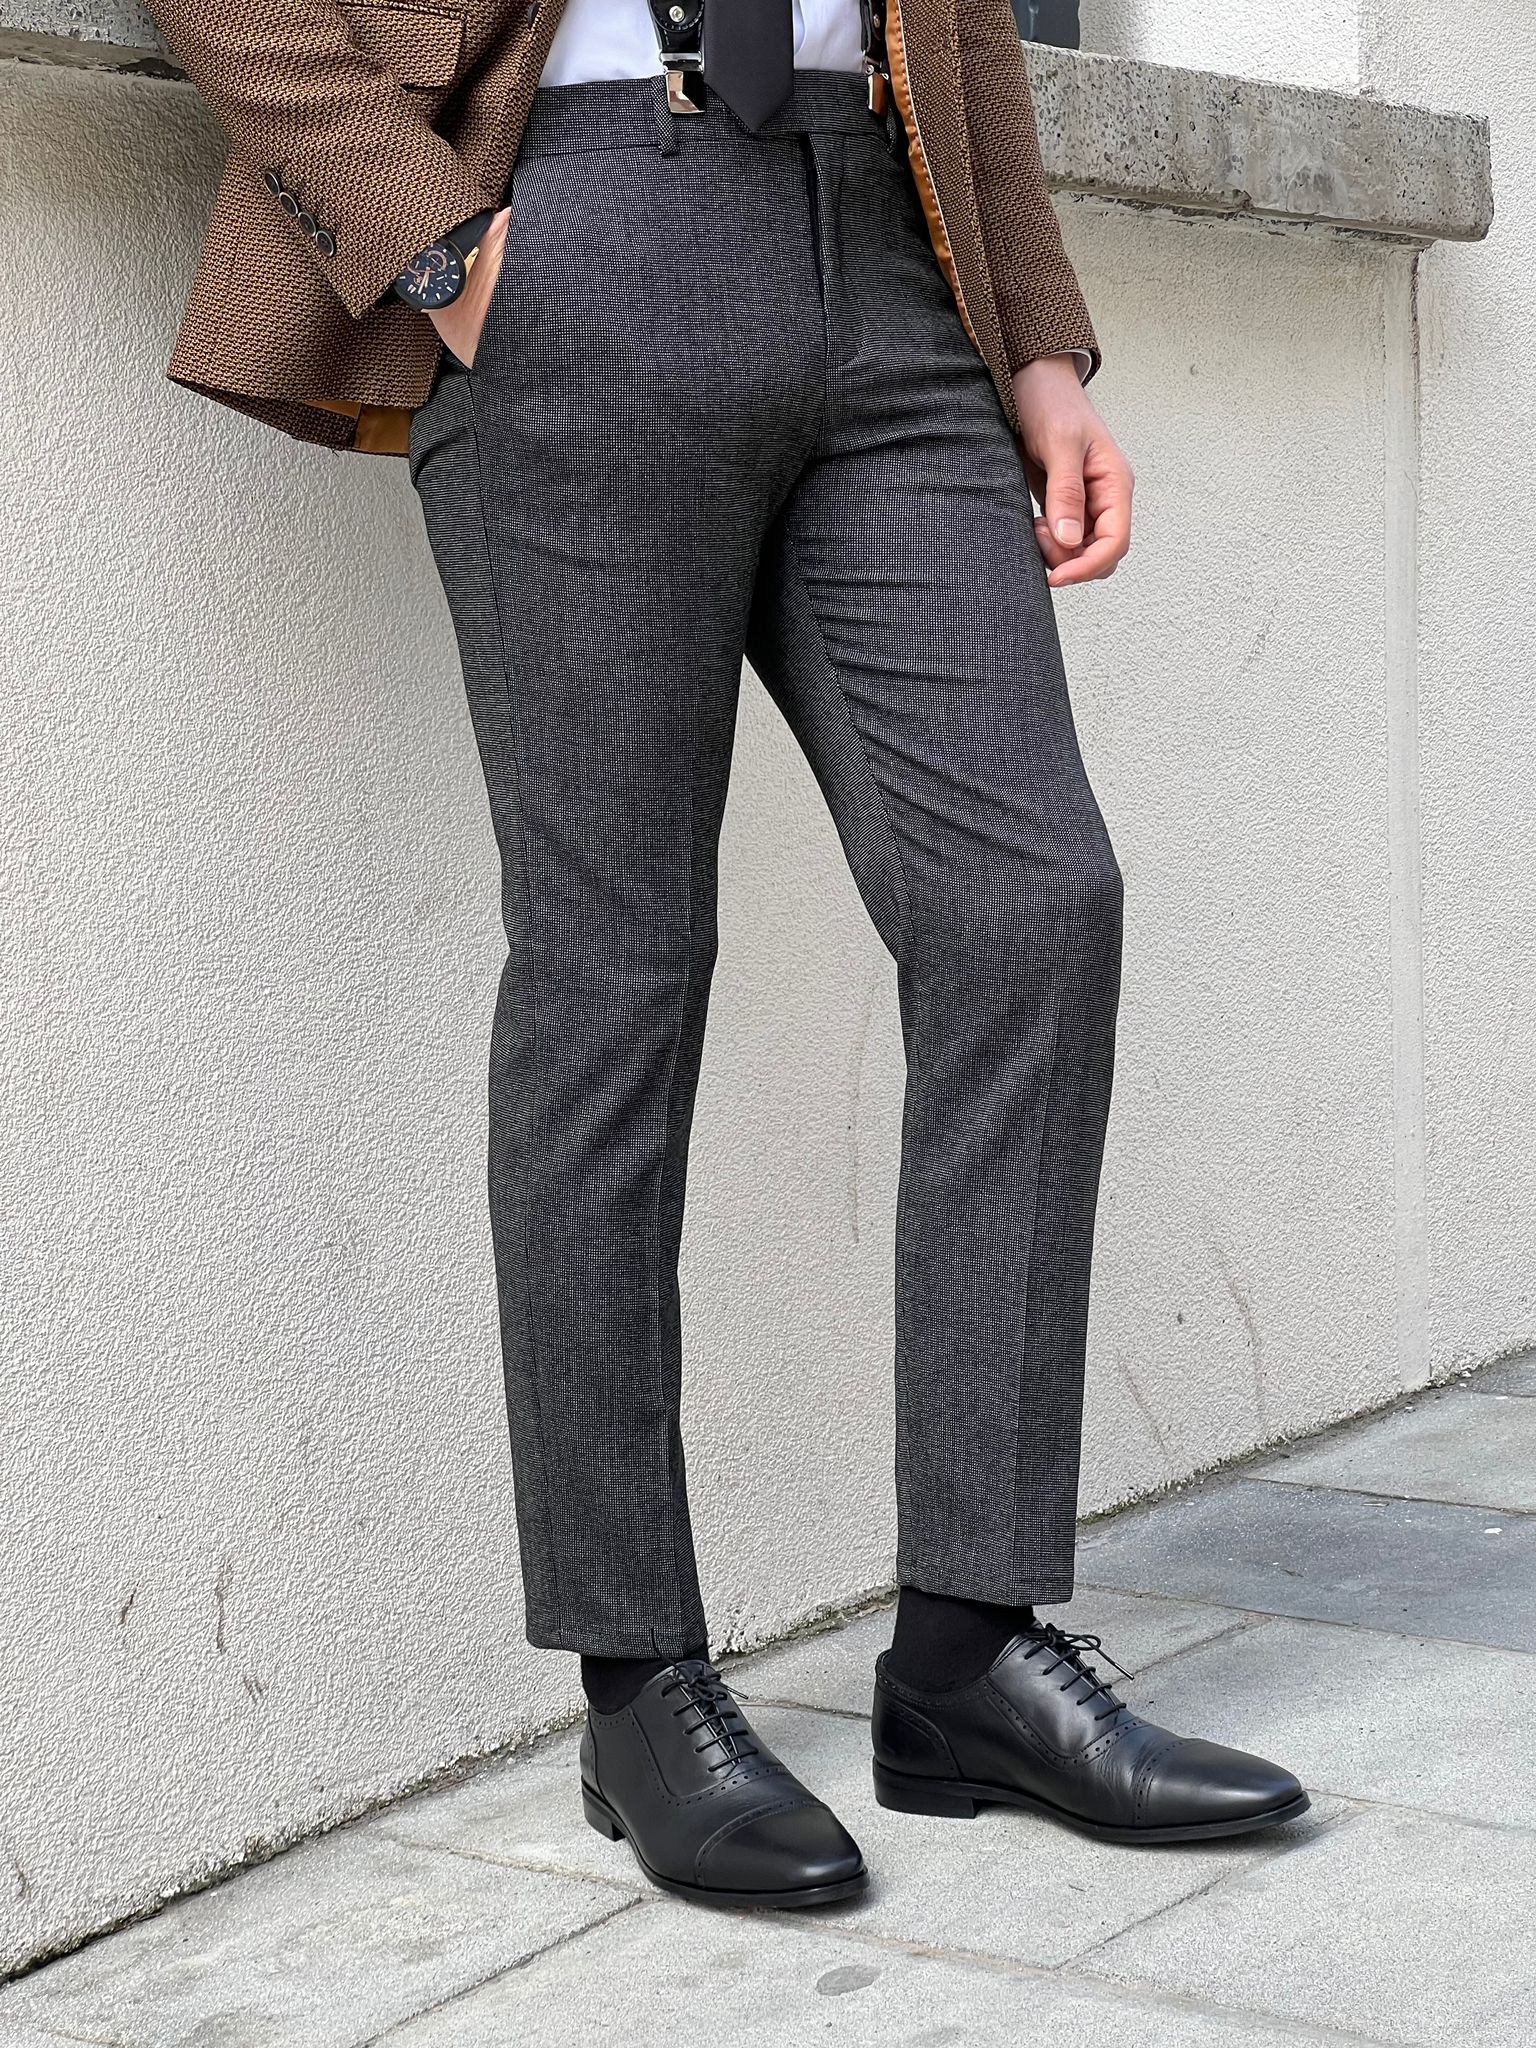 Bojoni Montebello Slim Fit High Quality Super Slim Micro Patterned Black Pants